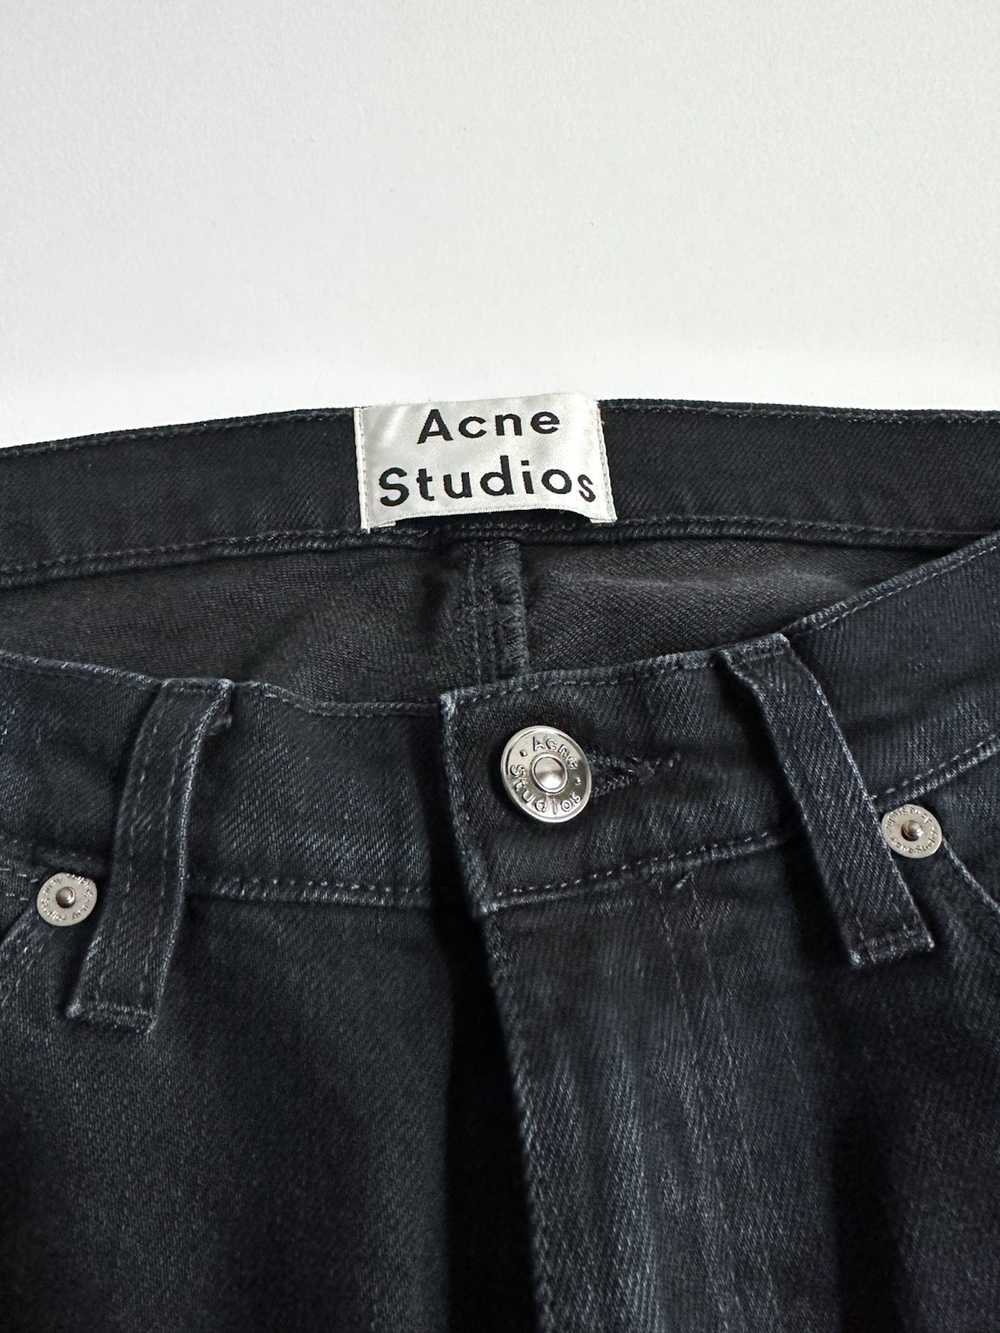 Acne Studios Acne Studios Slim Jeans - image 3